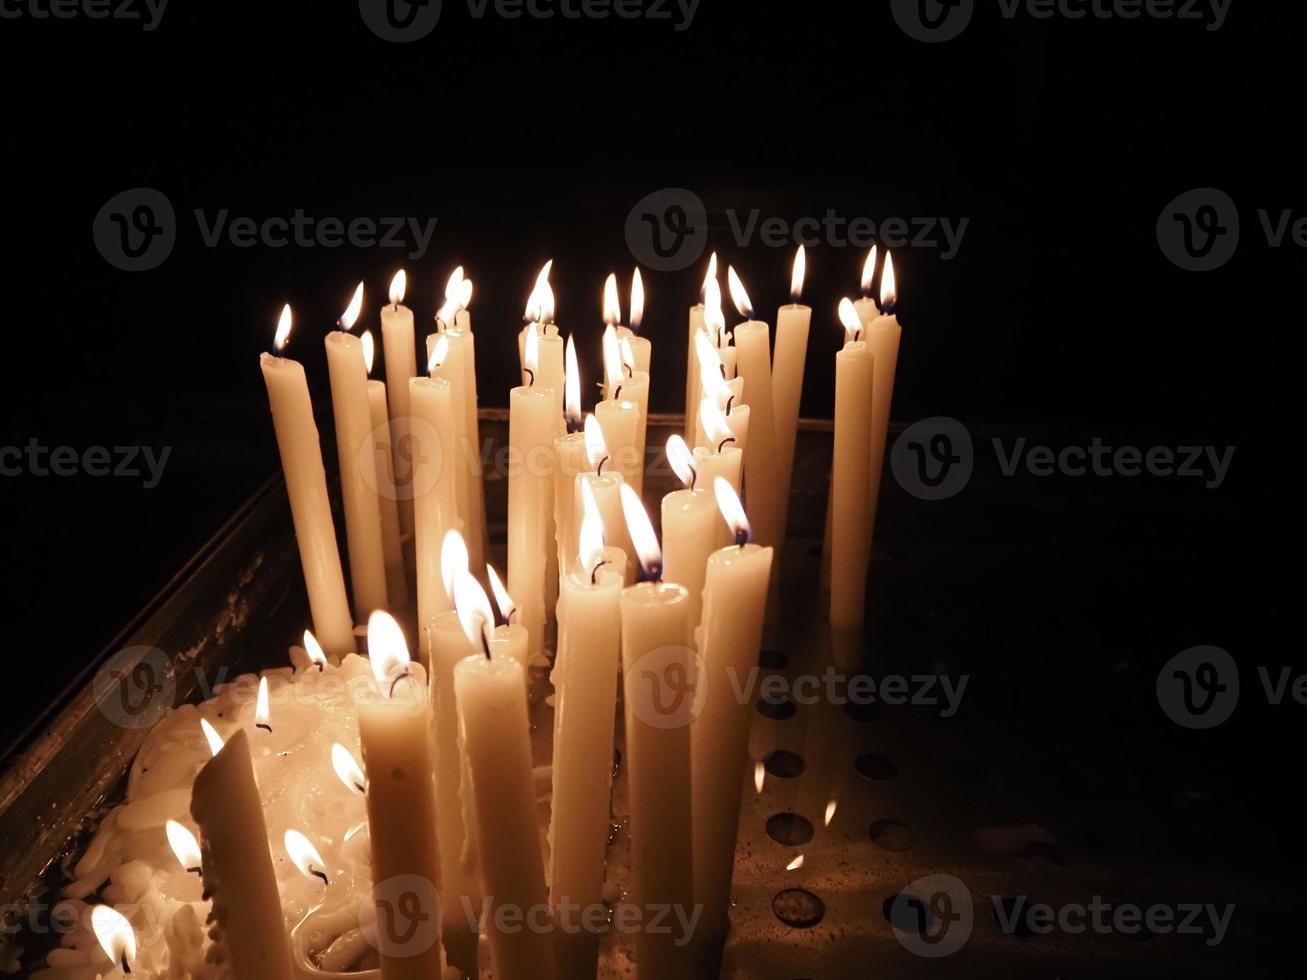 church votive candles white flames photo